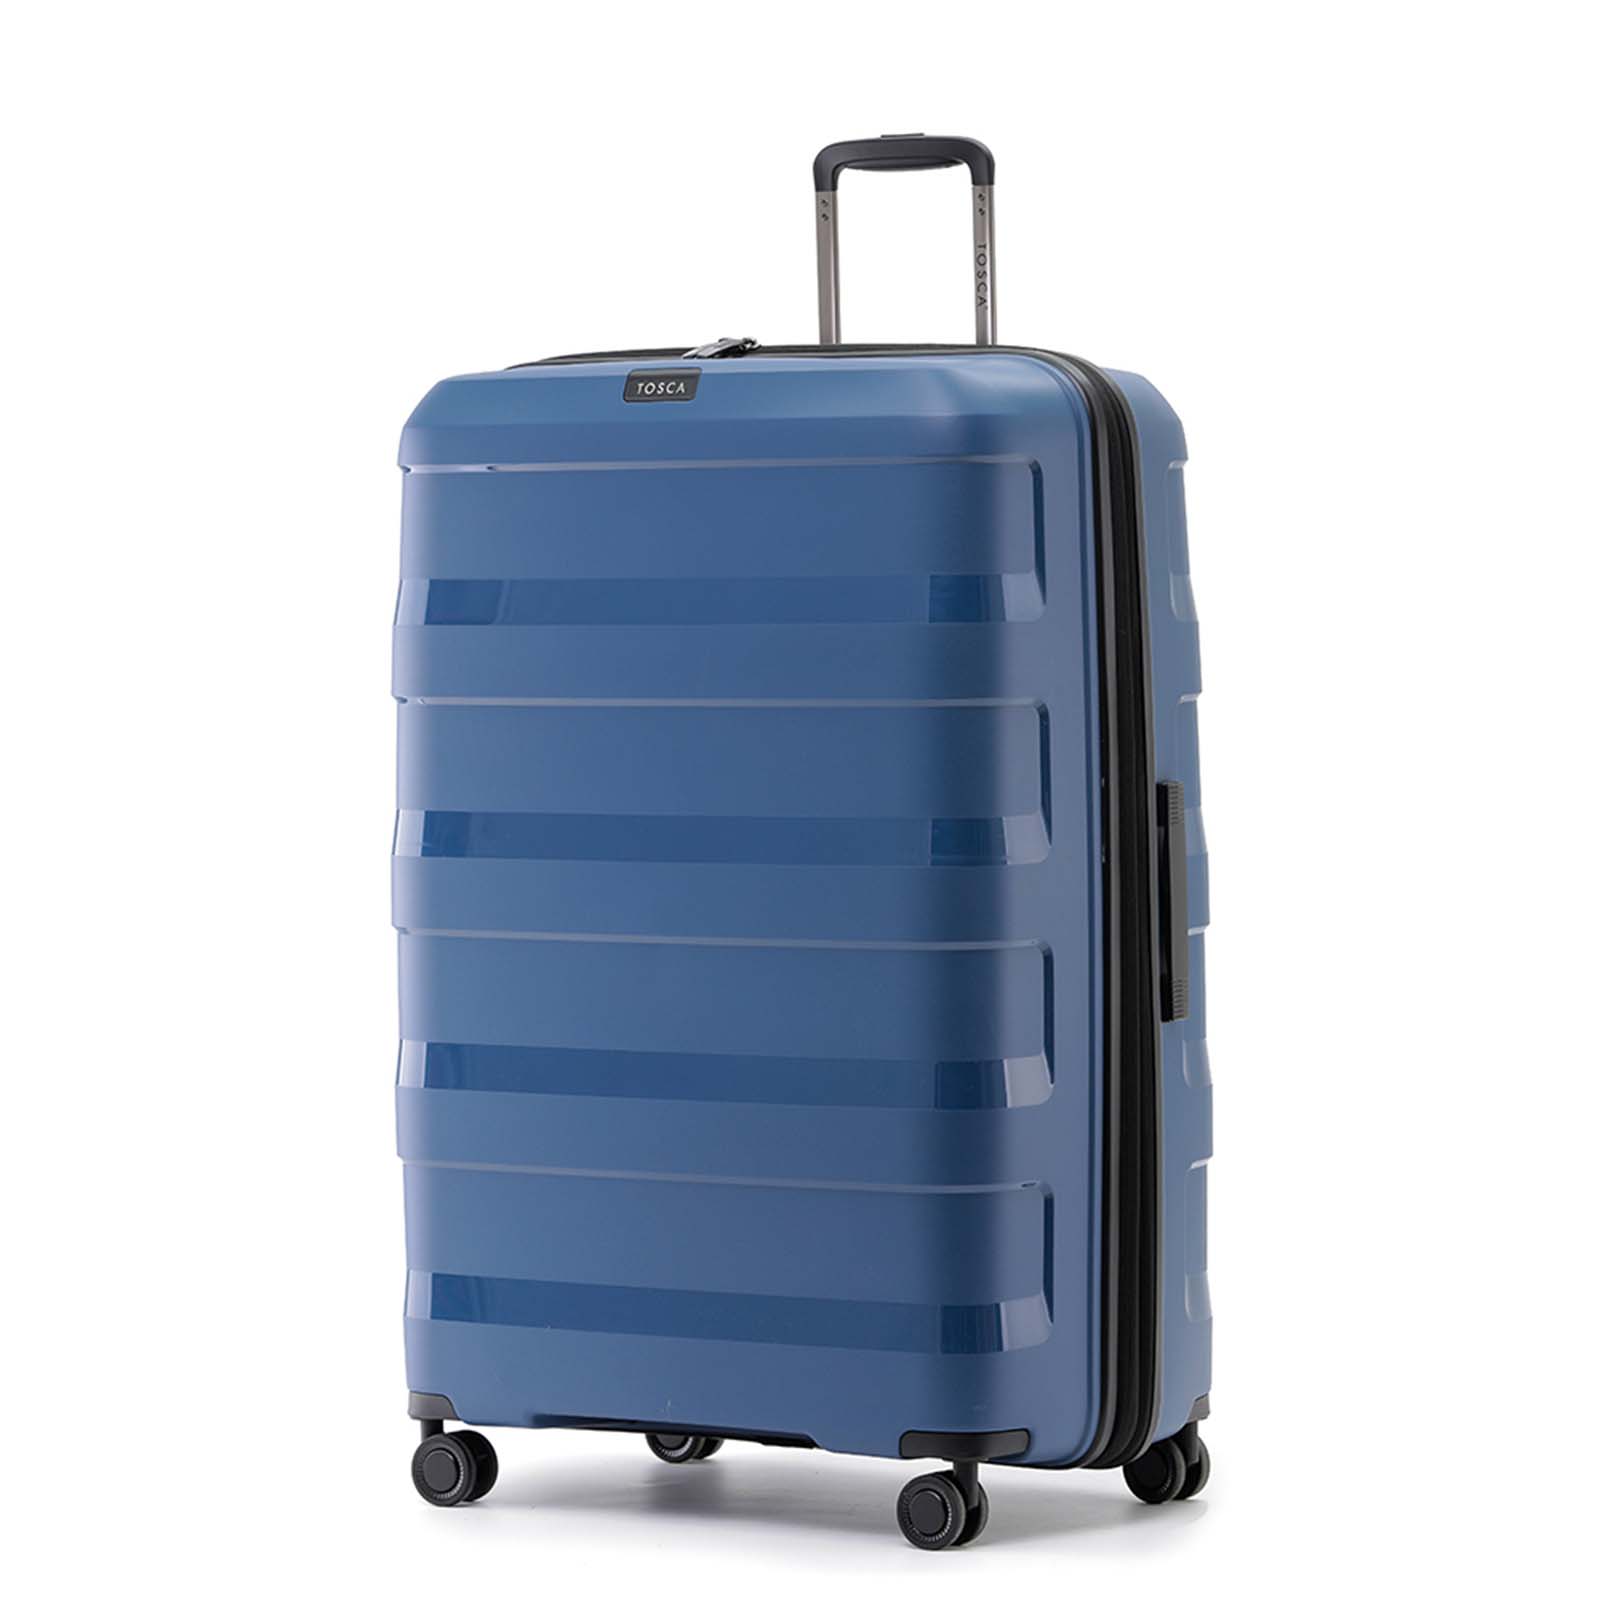 Tosca-Comet-4-Wheel-81cm-Large-Suitcase-Storm-Blue-Front-Angle